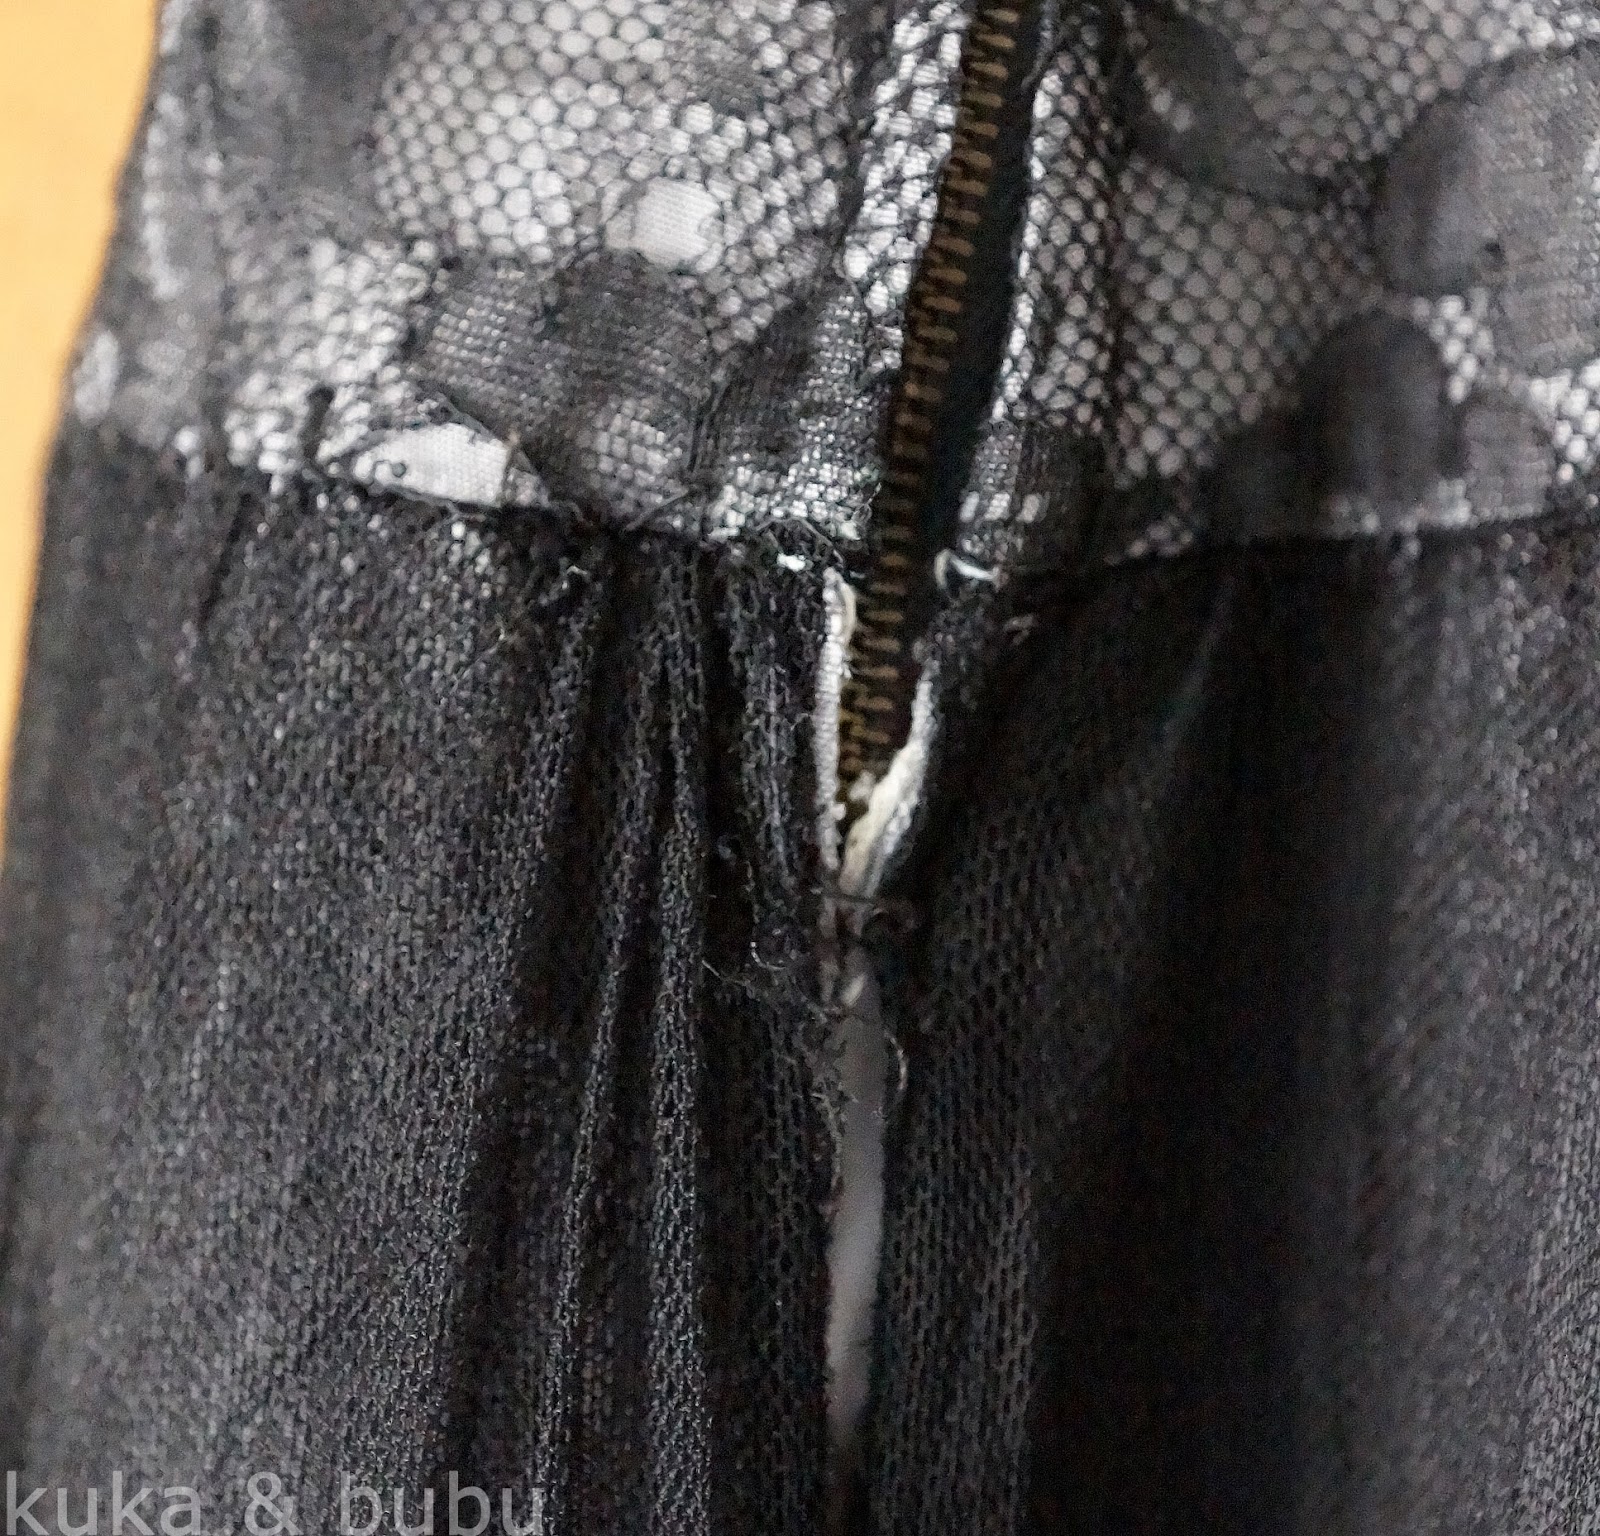 kuka and bubu: Vintage dress mending